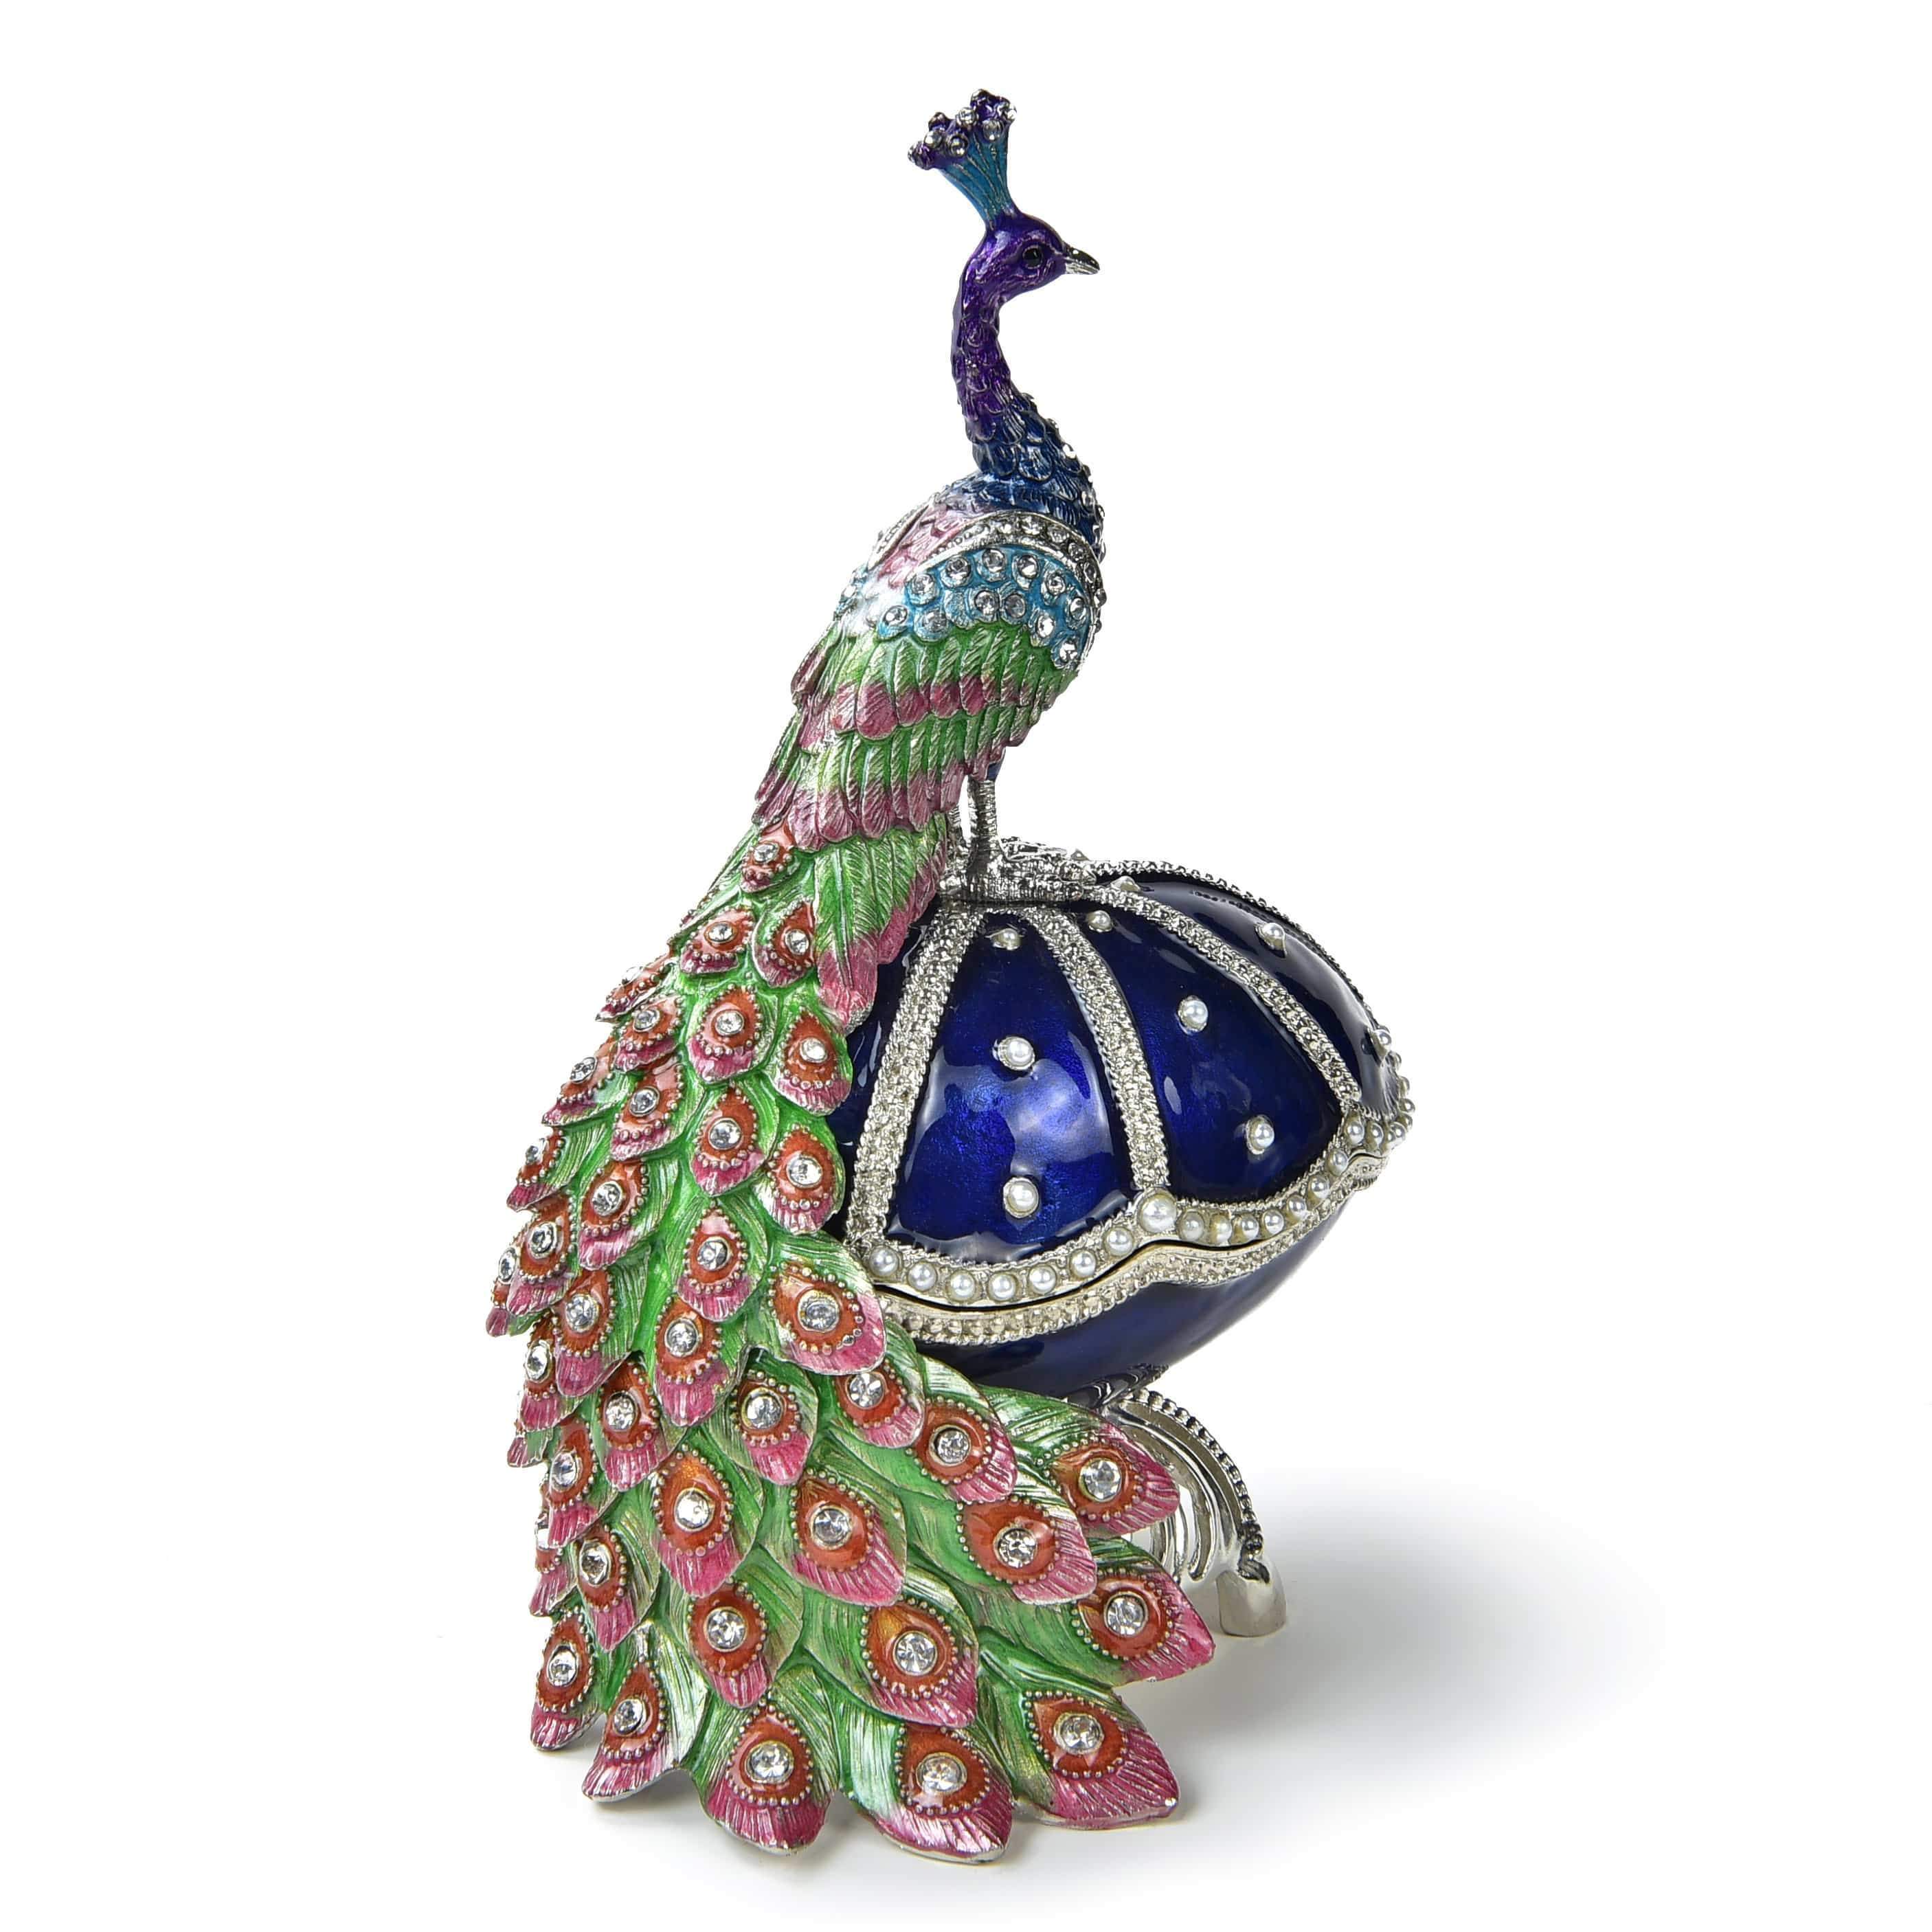 Kalifano Vanity Figurine Peacock on Egg Figurine Keepsake Box made with Crystals SVA-094